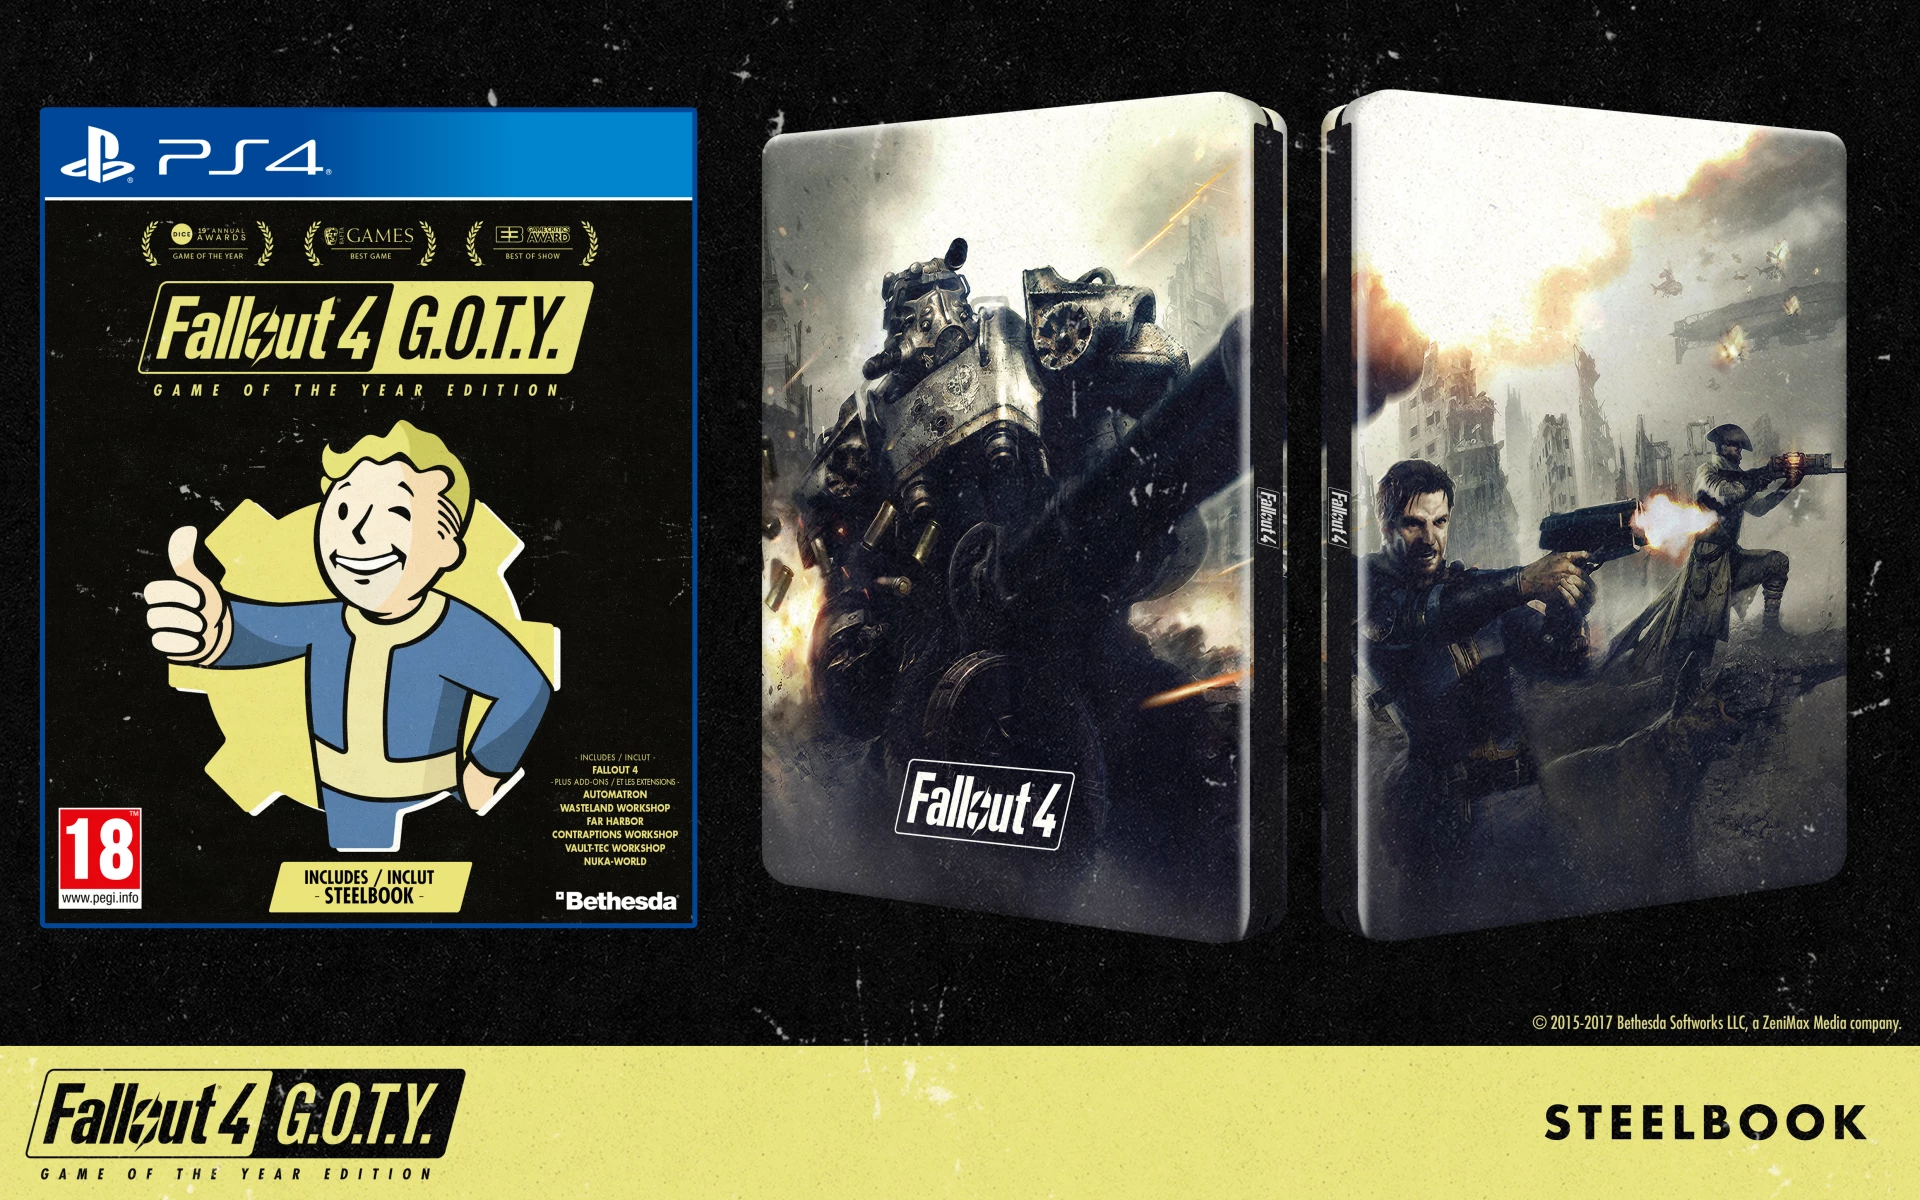 Fallout 4 GOTY - 25th Anniversary Steelbook Edition